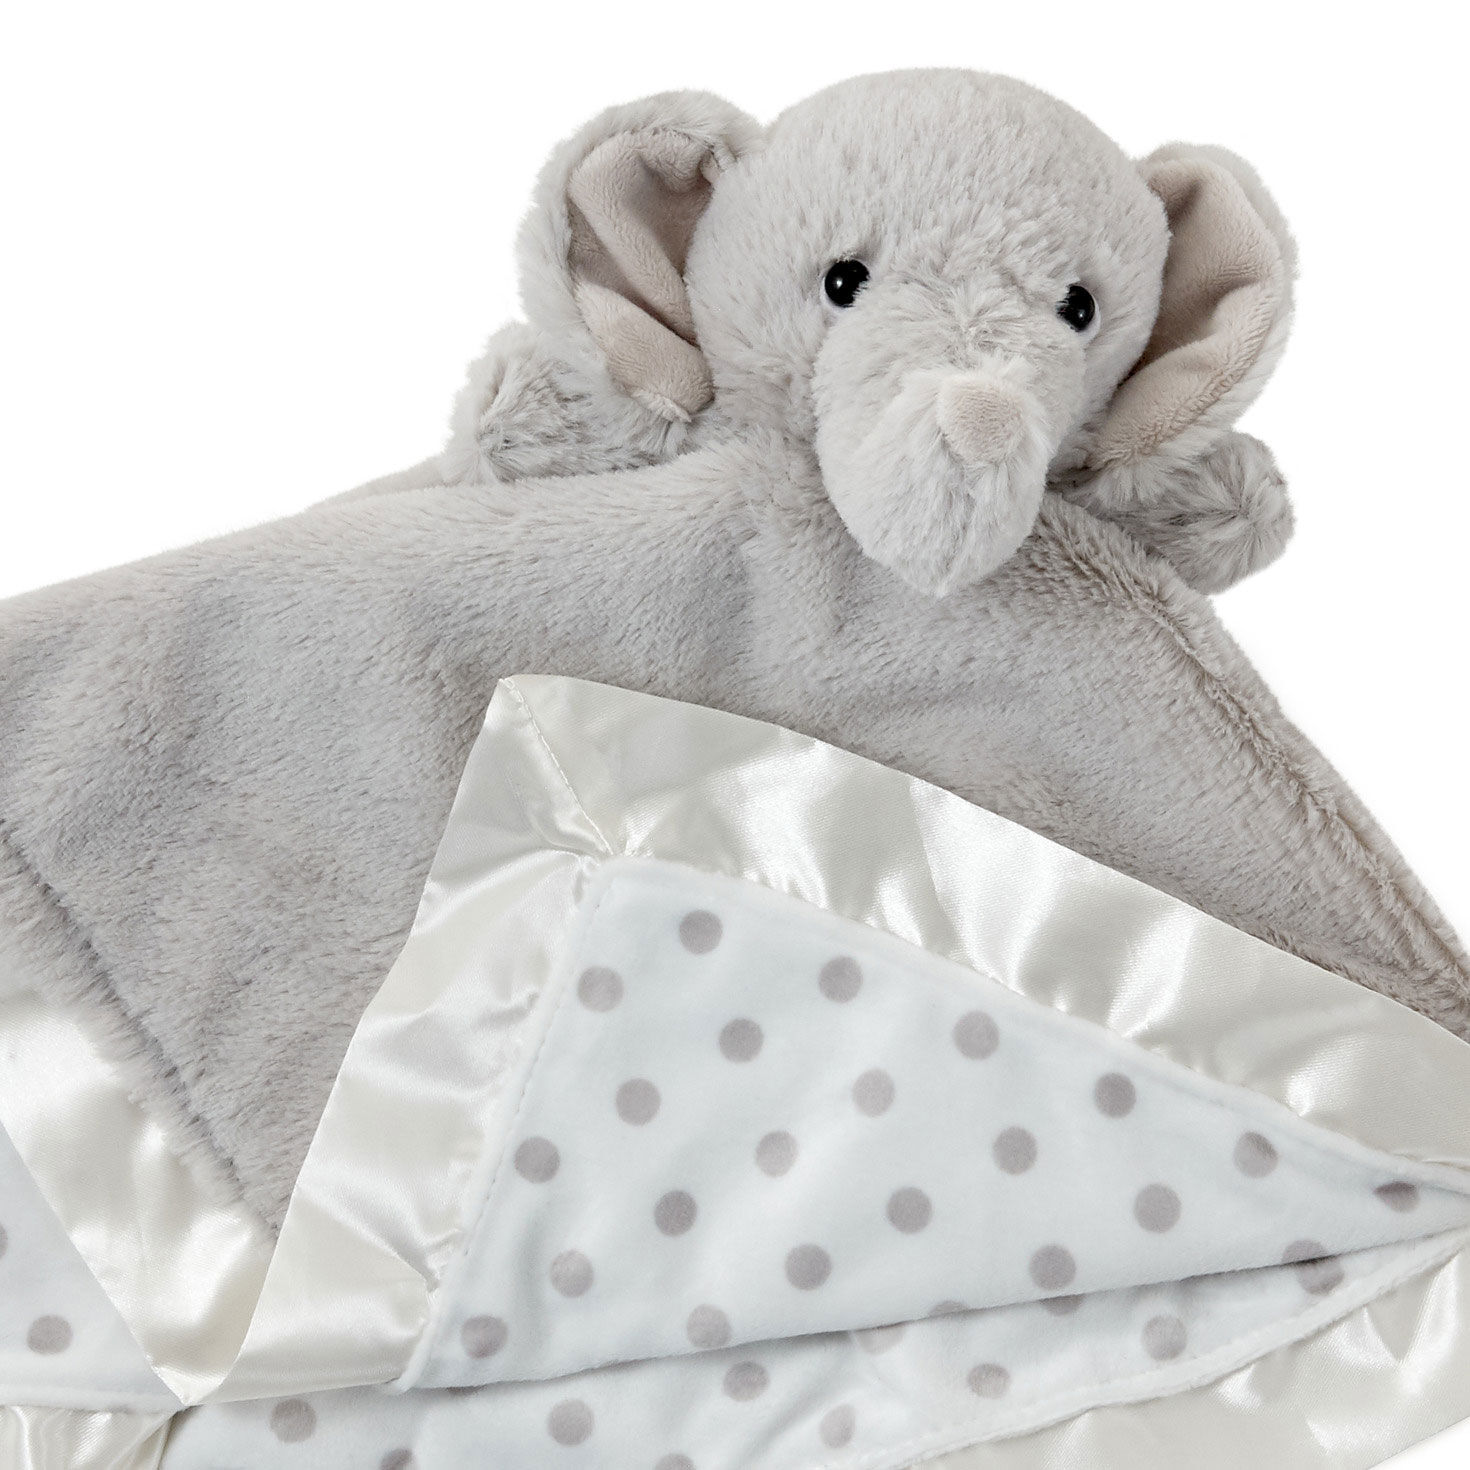 Baby Elephant Lovey Blanket for only USD 18.99 | Hallmark